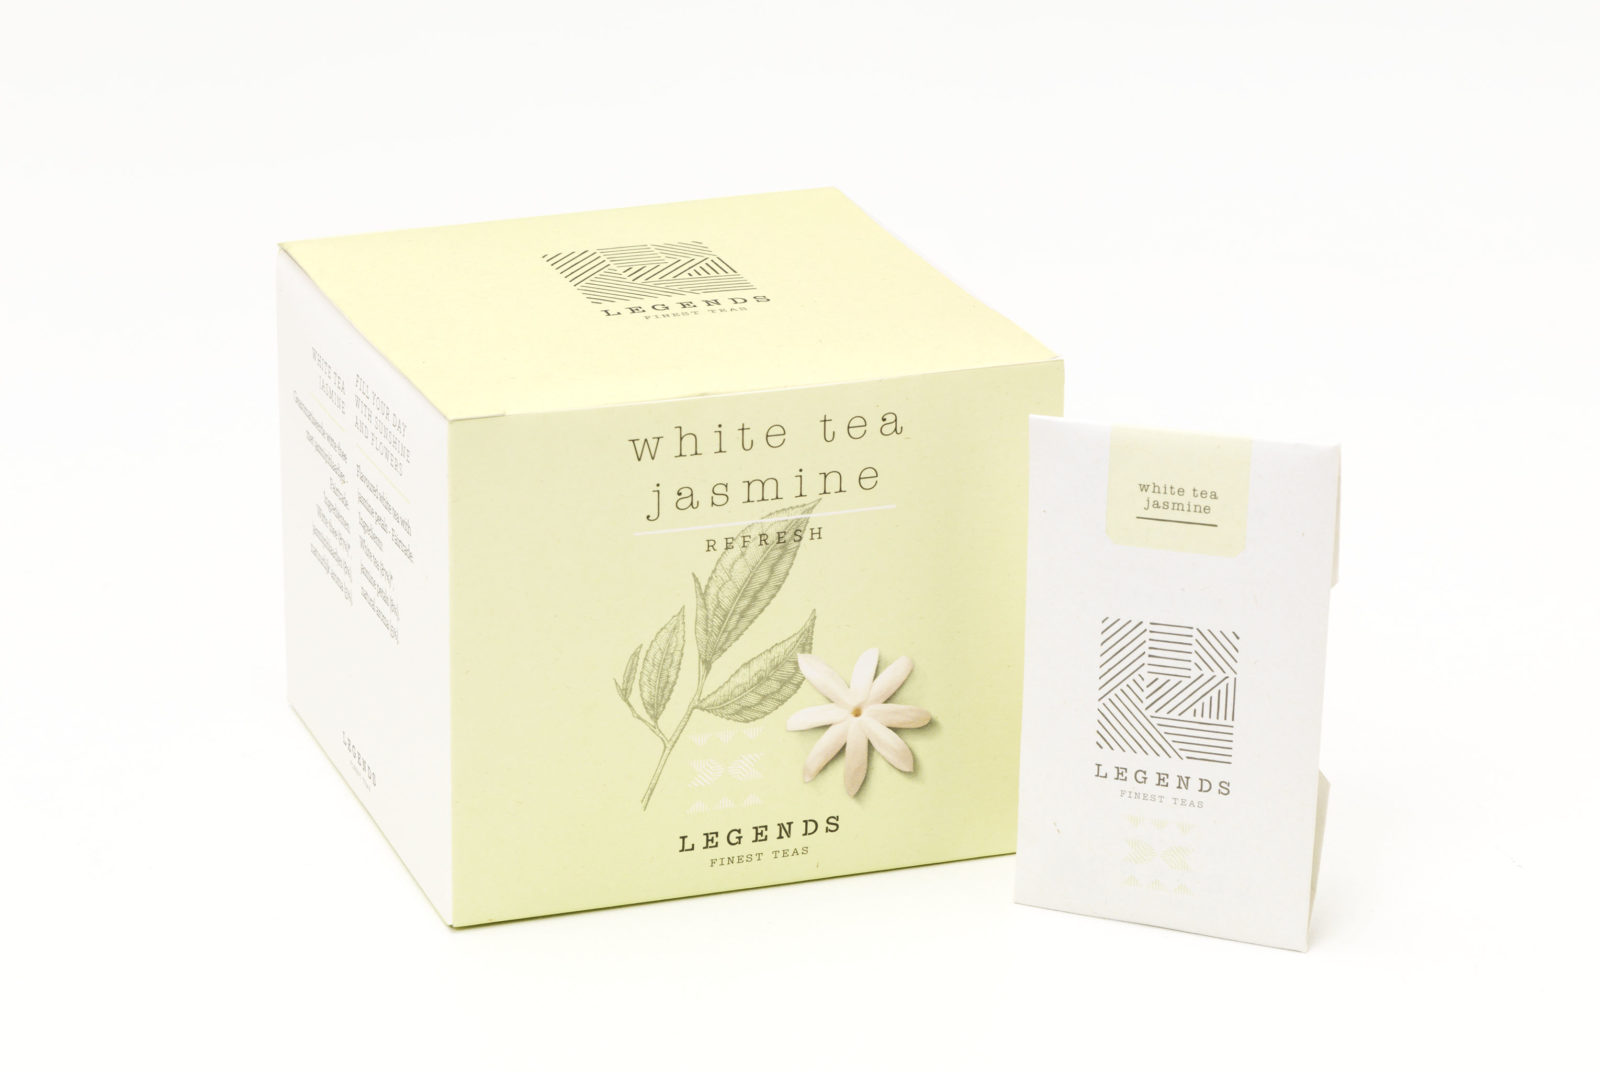 White tea jasmine